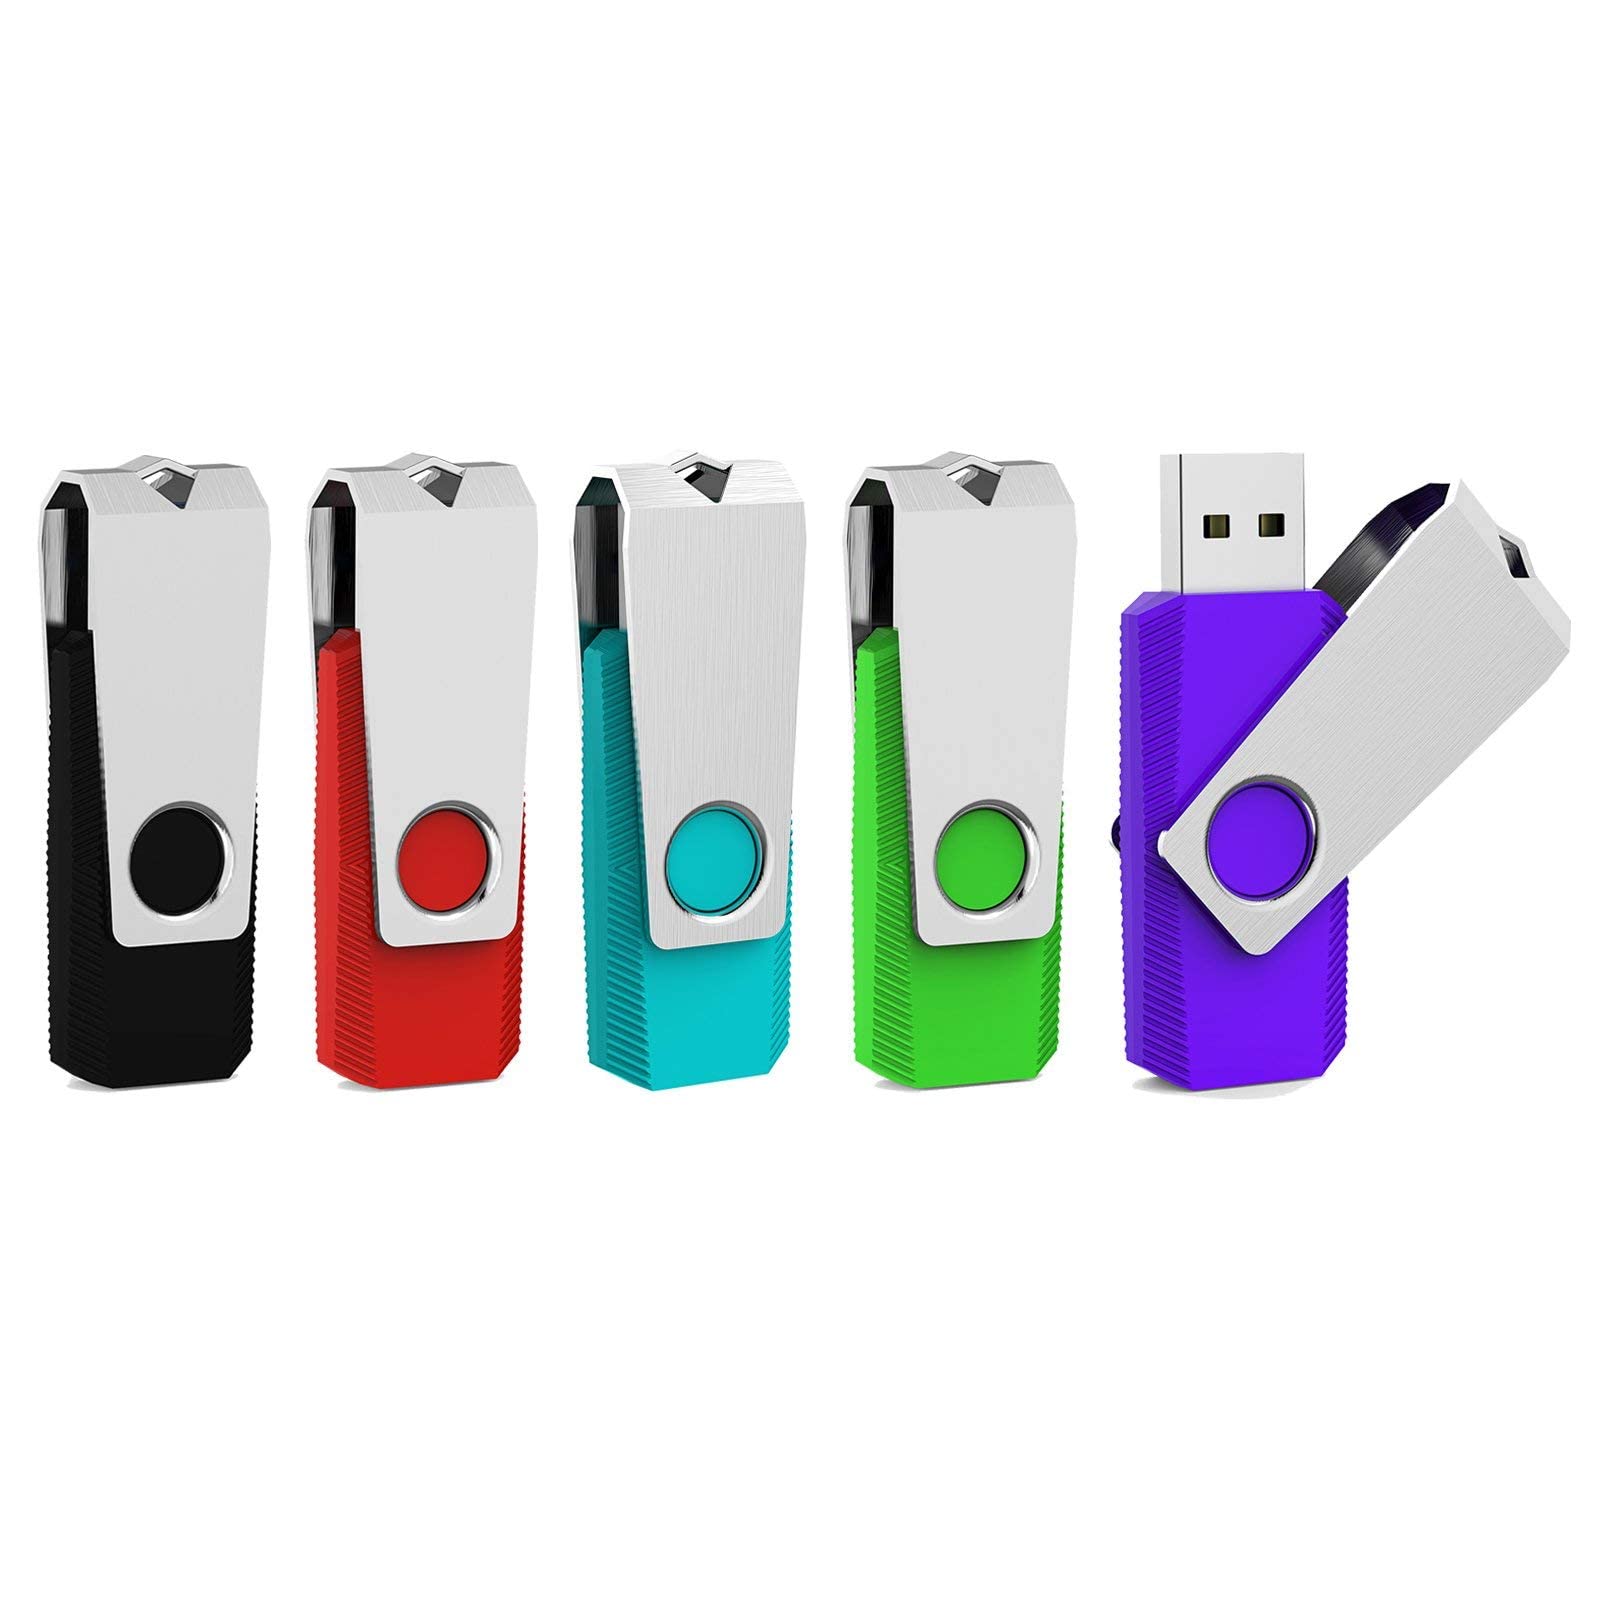 Aiibe 64GB Flash Drive 3.0 5 Pack 64GB USB 3.0 Thumb Drive USB Drive 64GB Jump Drive Memory Stick Multi Pack 64GB Flash Drives (64G, 5 Mixed Colors: Black Red Cyan Green Purple)